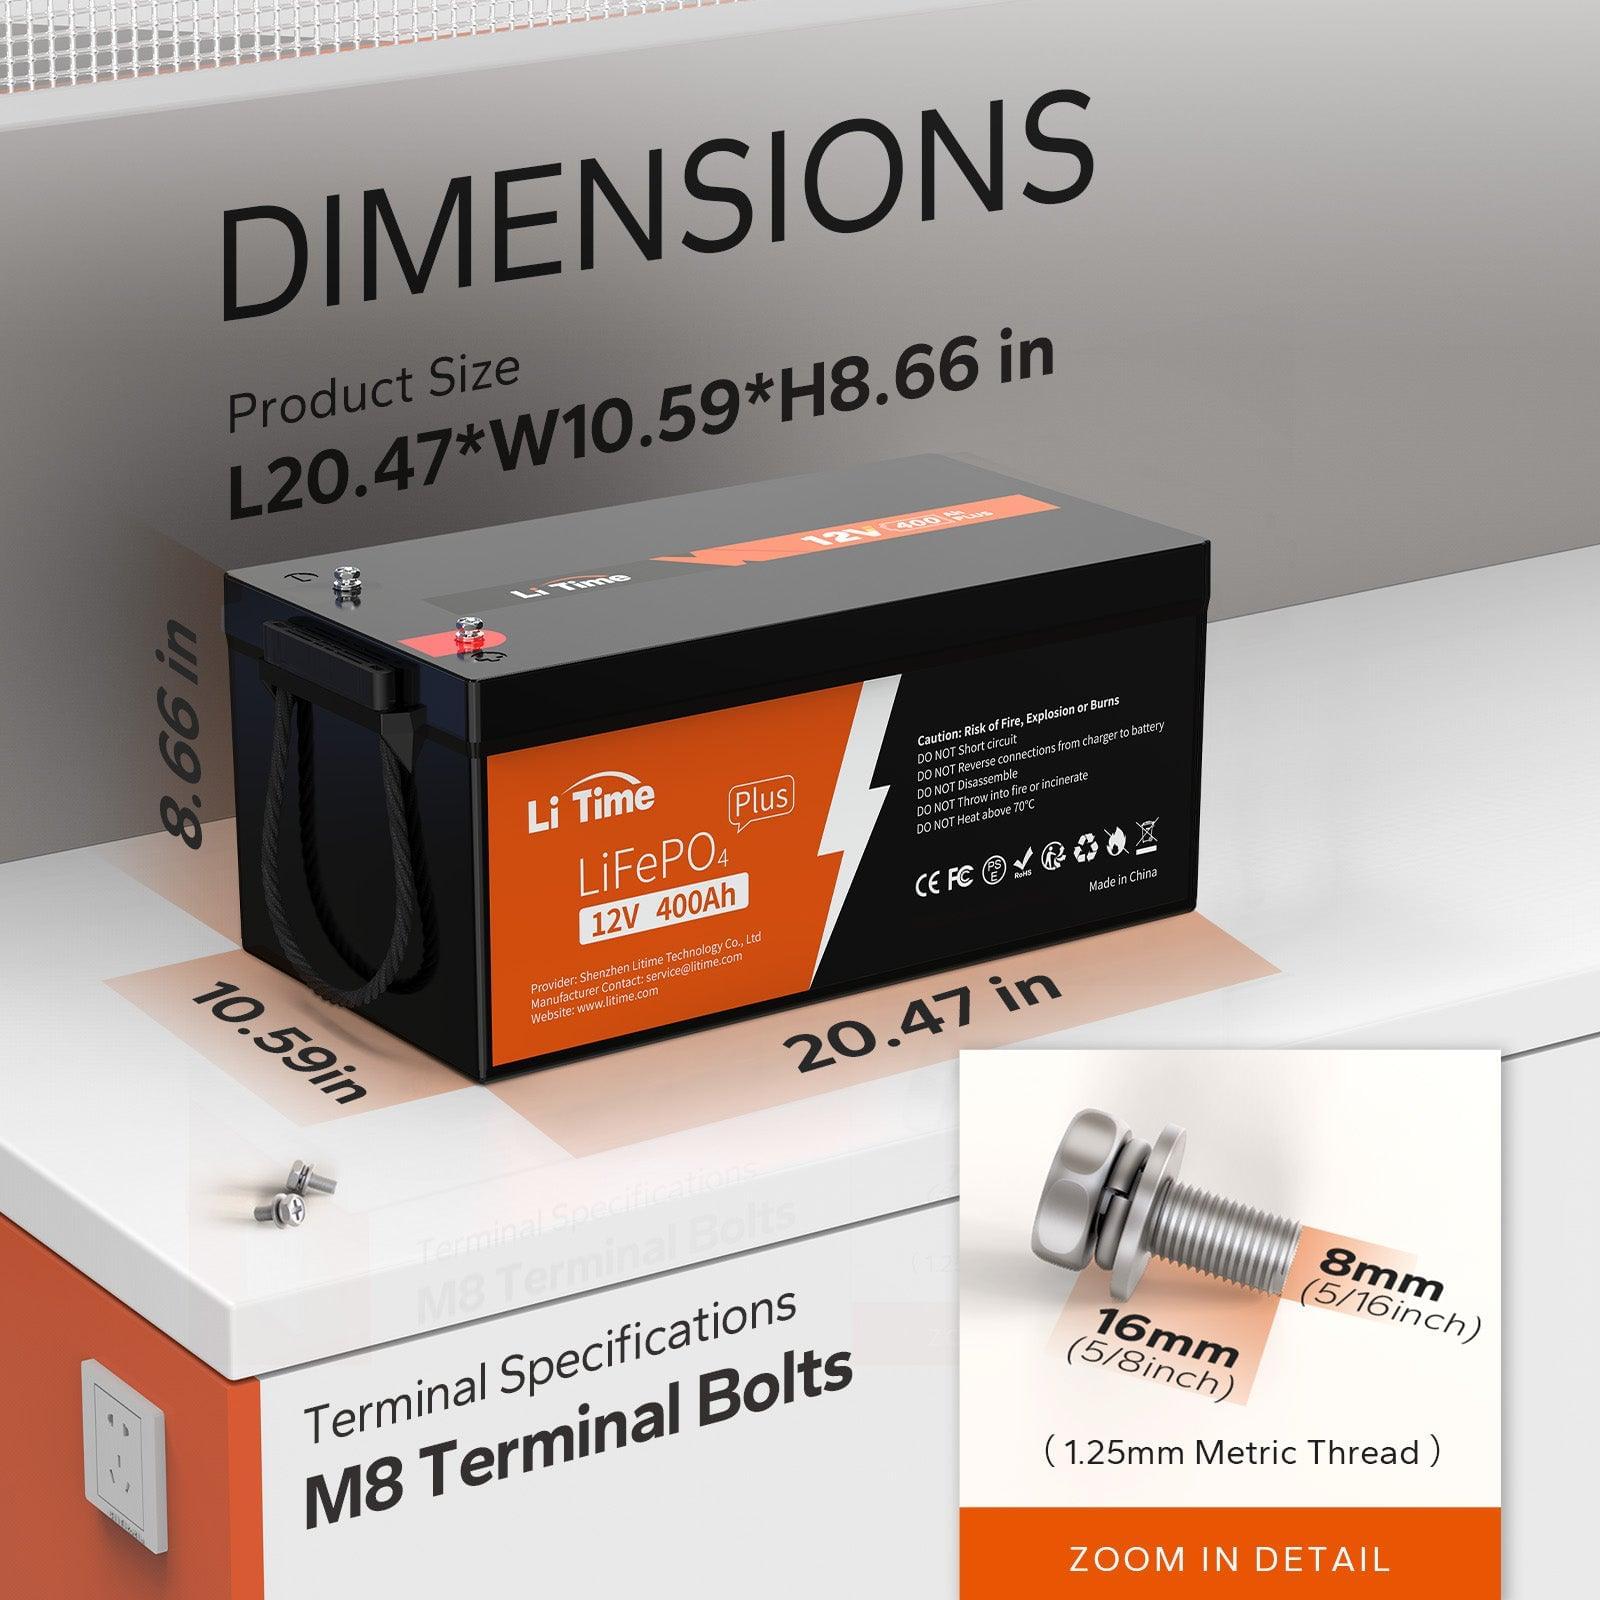 litime 12v 400ah lithium battery dimensions